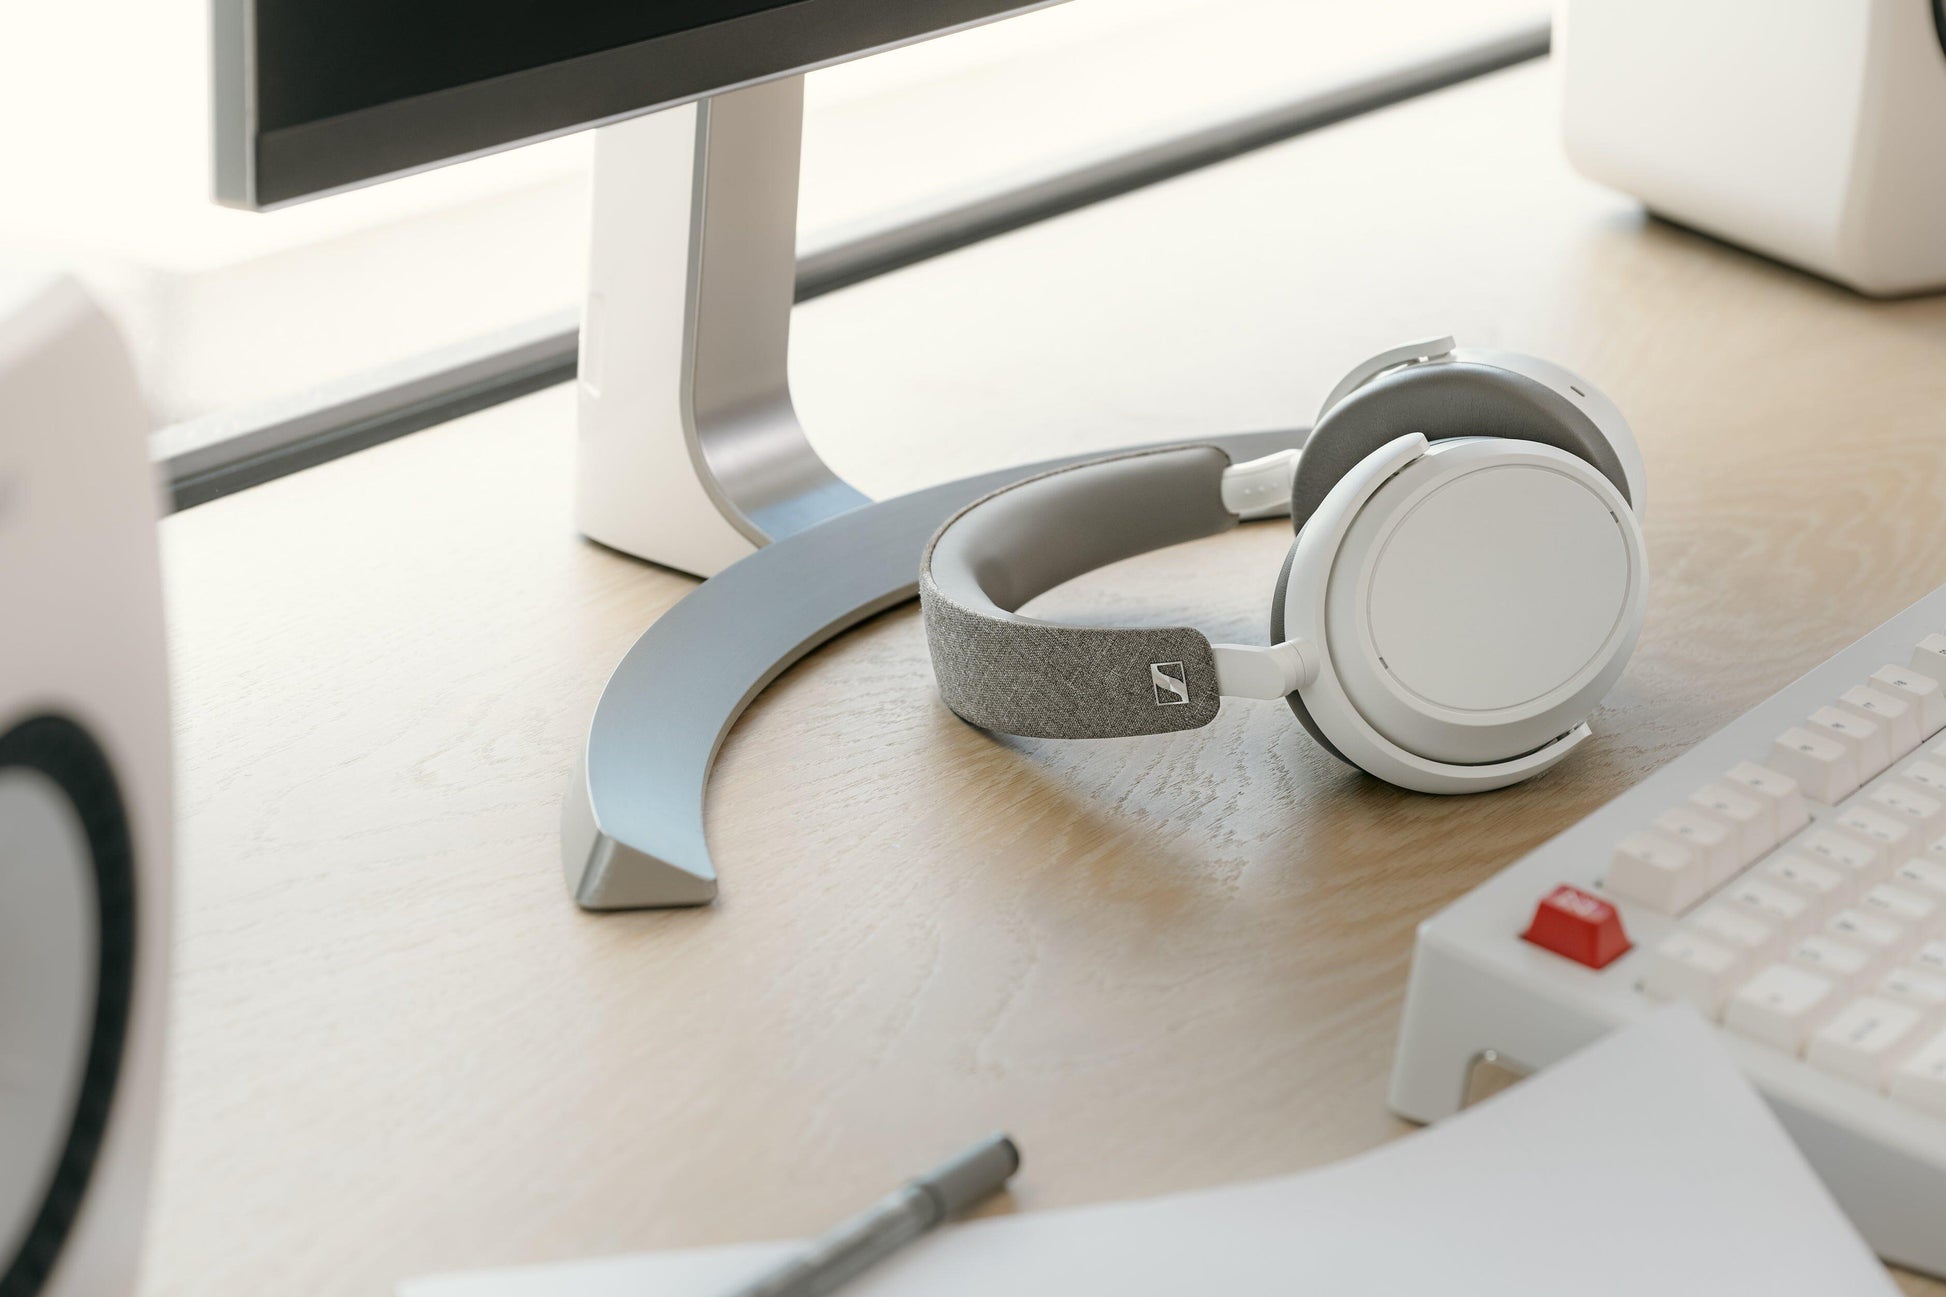 Sennheiser MOMENTUM 4 Wireless Headphones, Bluetooth for Crystal